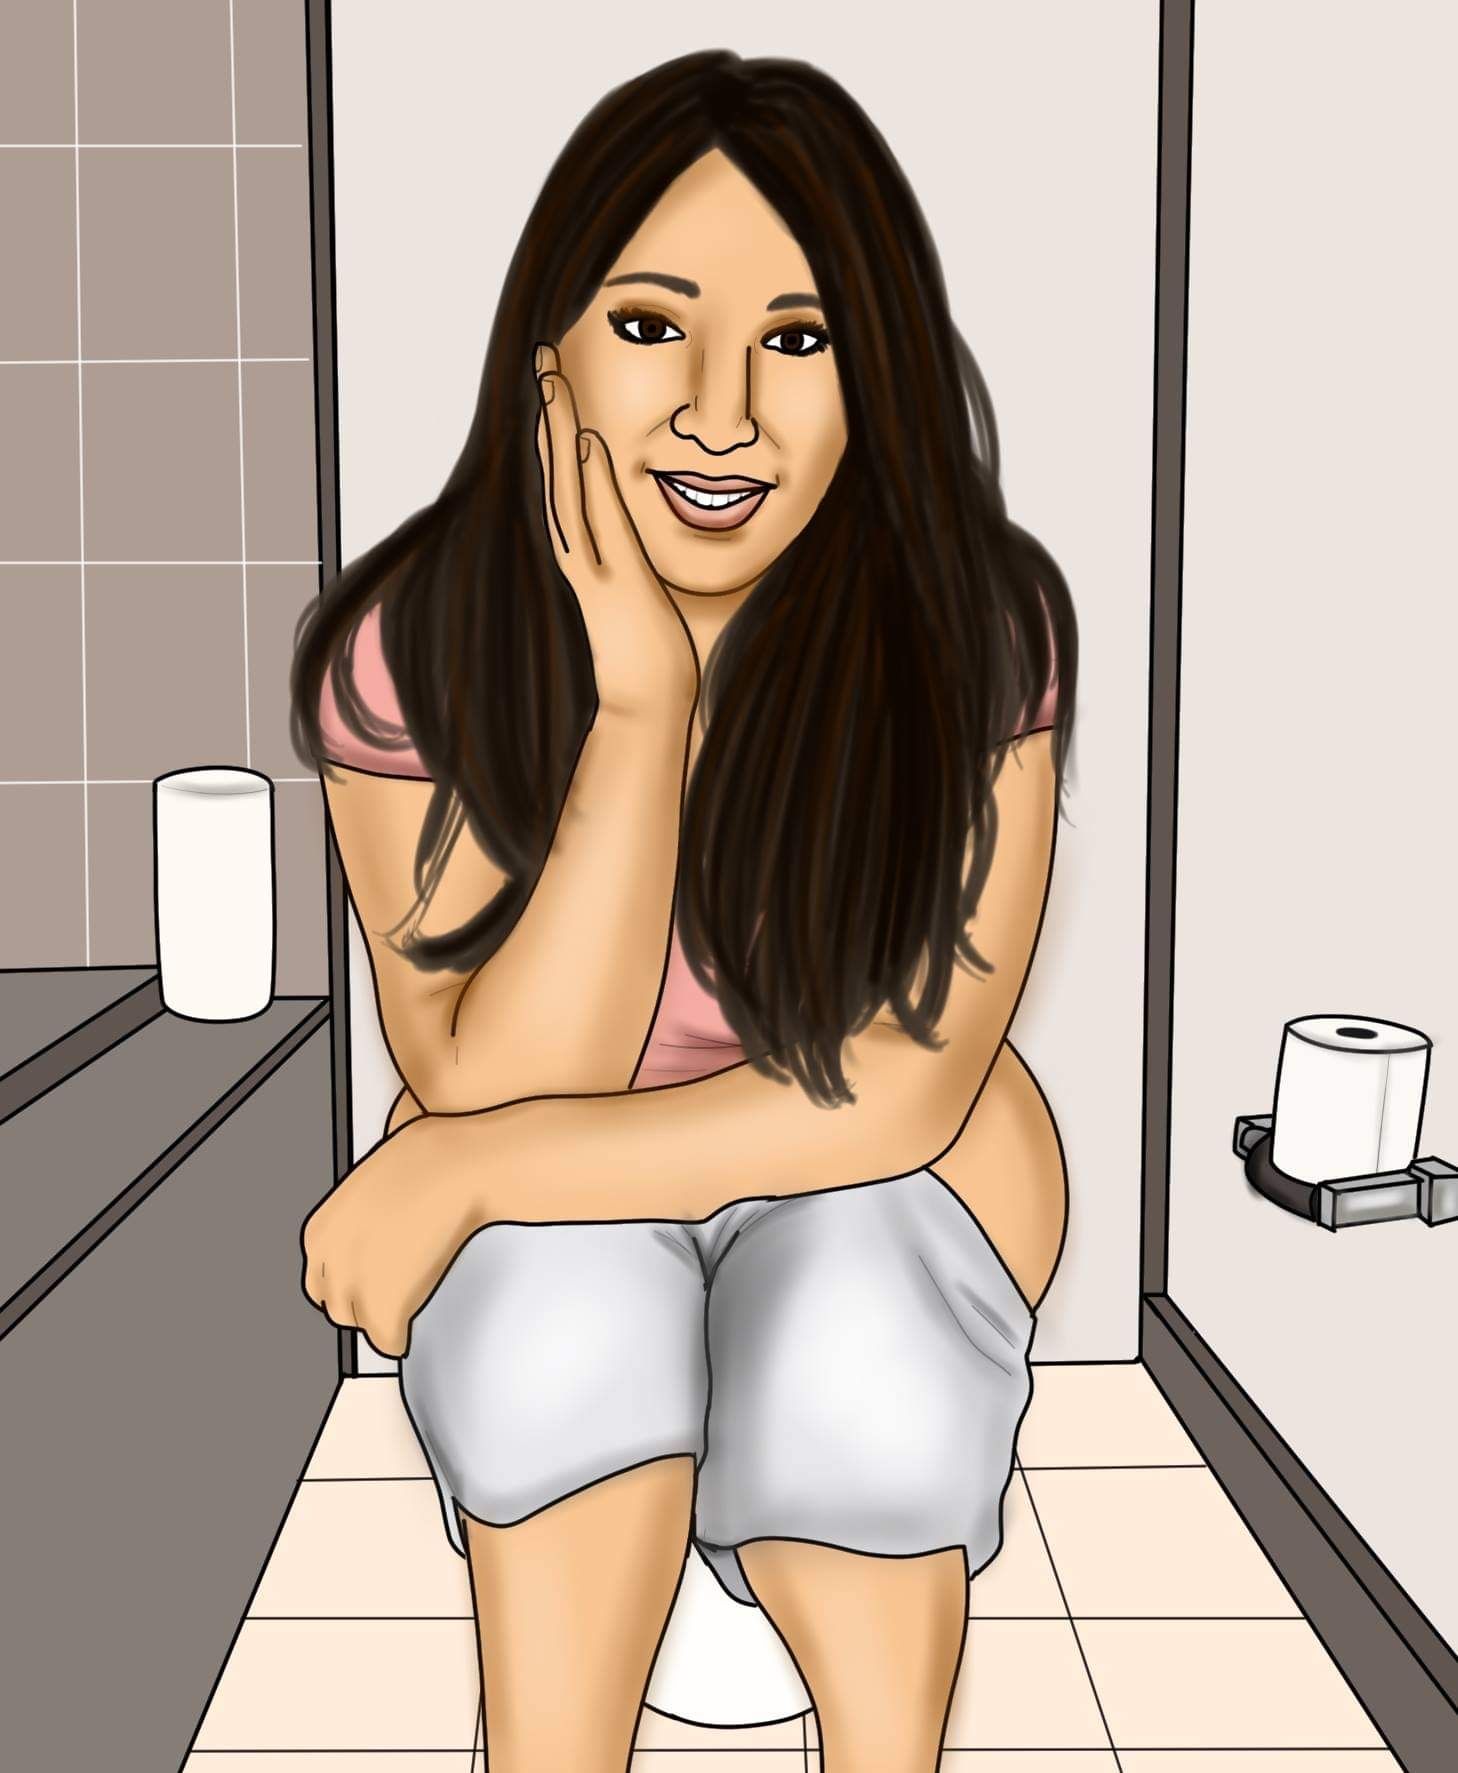 Nadine On The Toilet